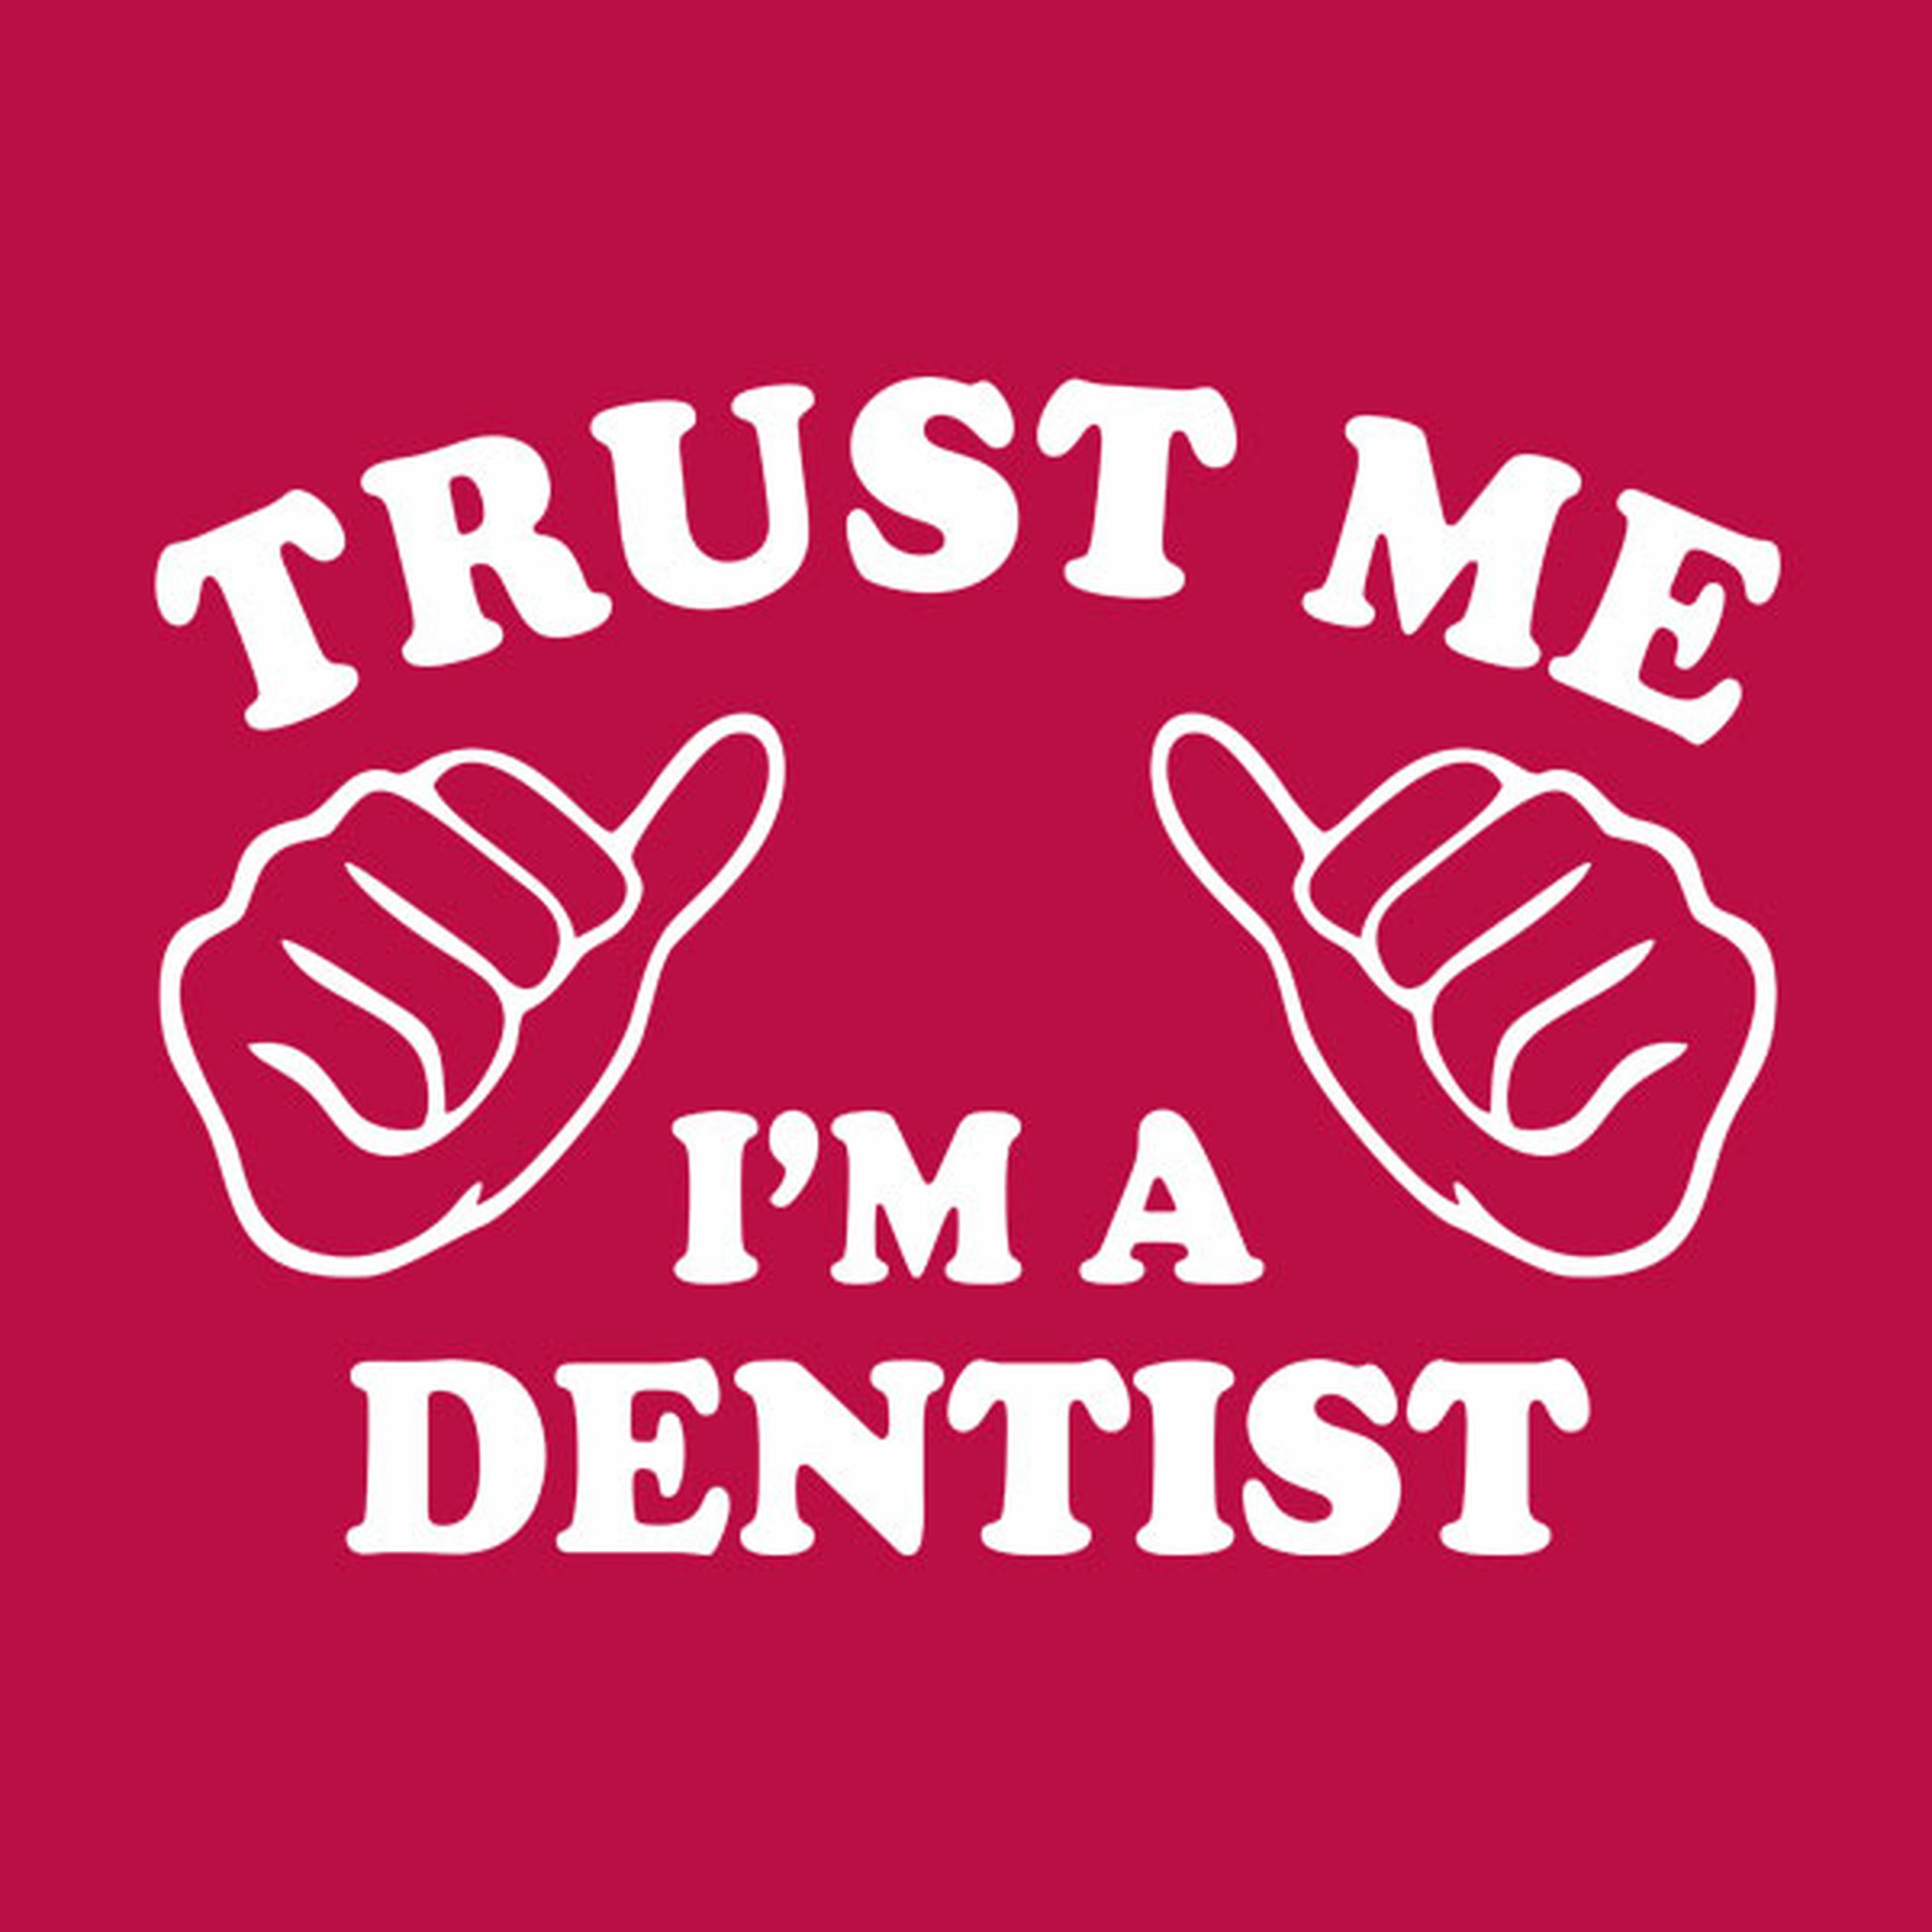 Trust me - I am a dentist - T-shirt